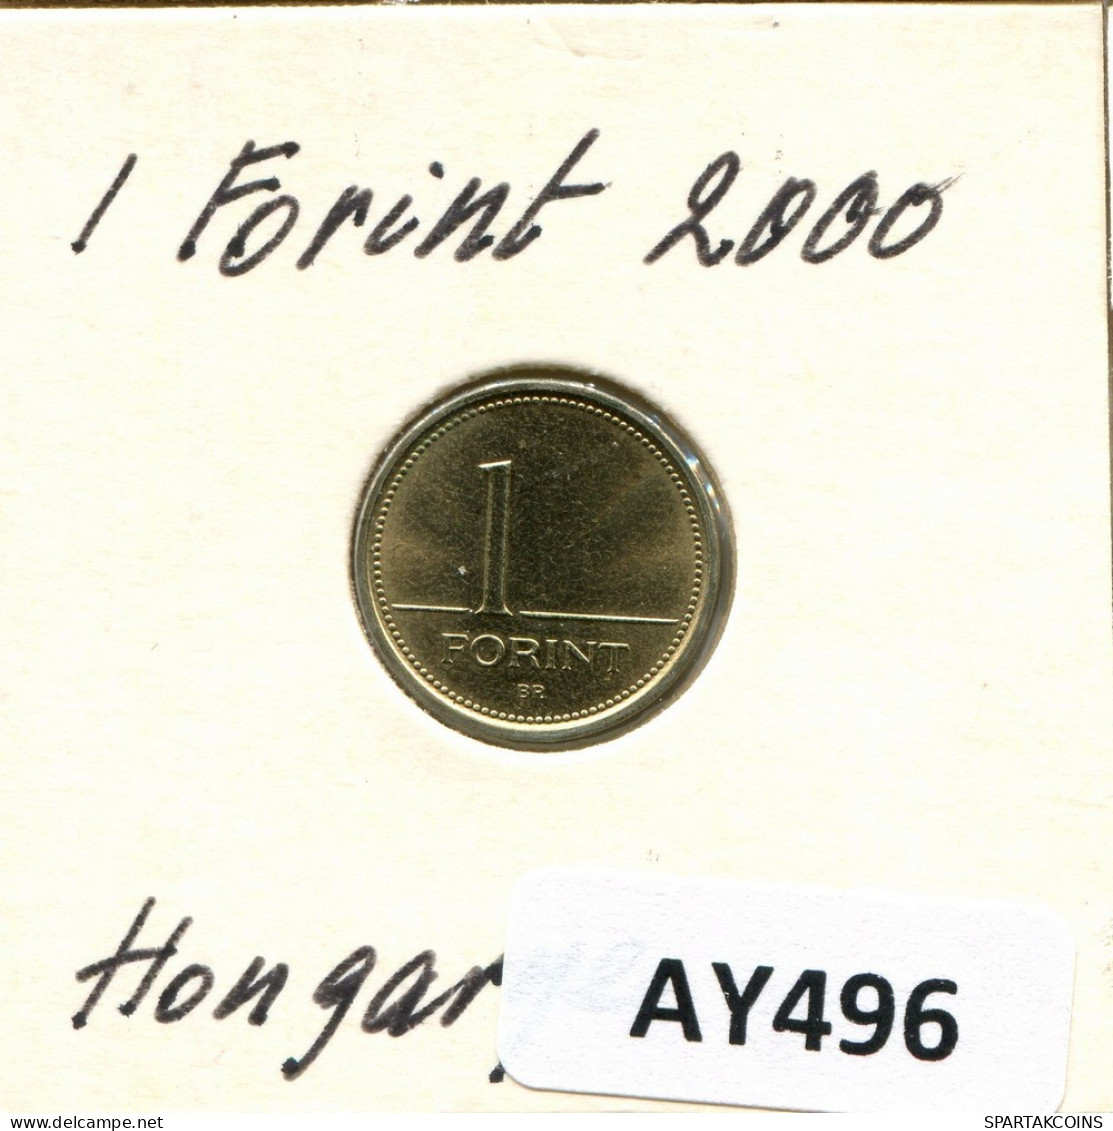 1 FORINT 2000 SIEBENBÜRGEN HUNGARY Münze #AY496.D.A - Hungary